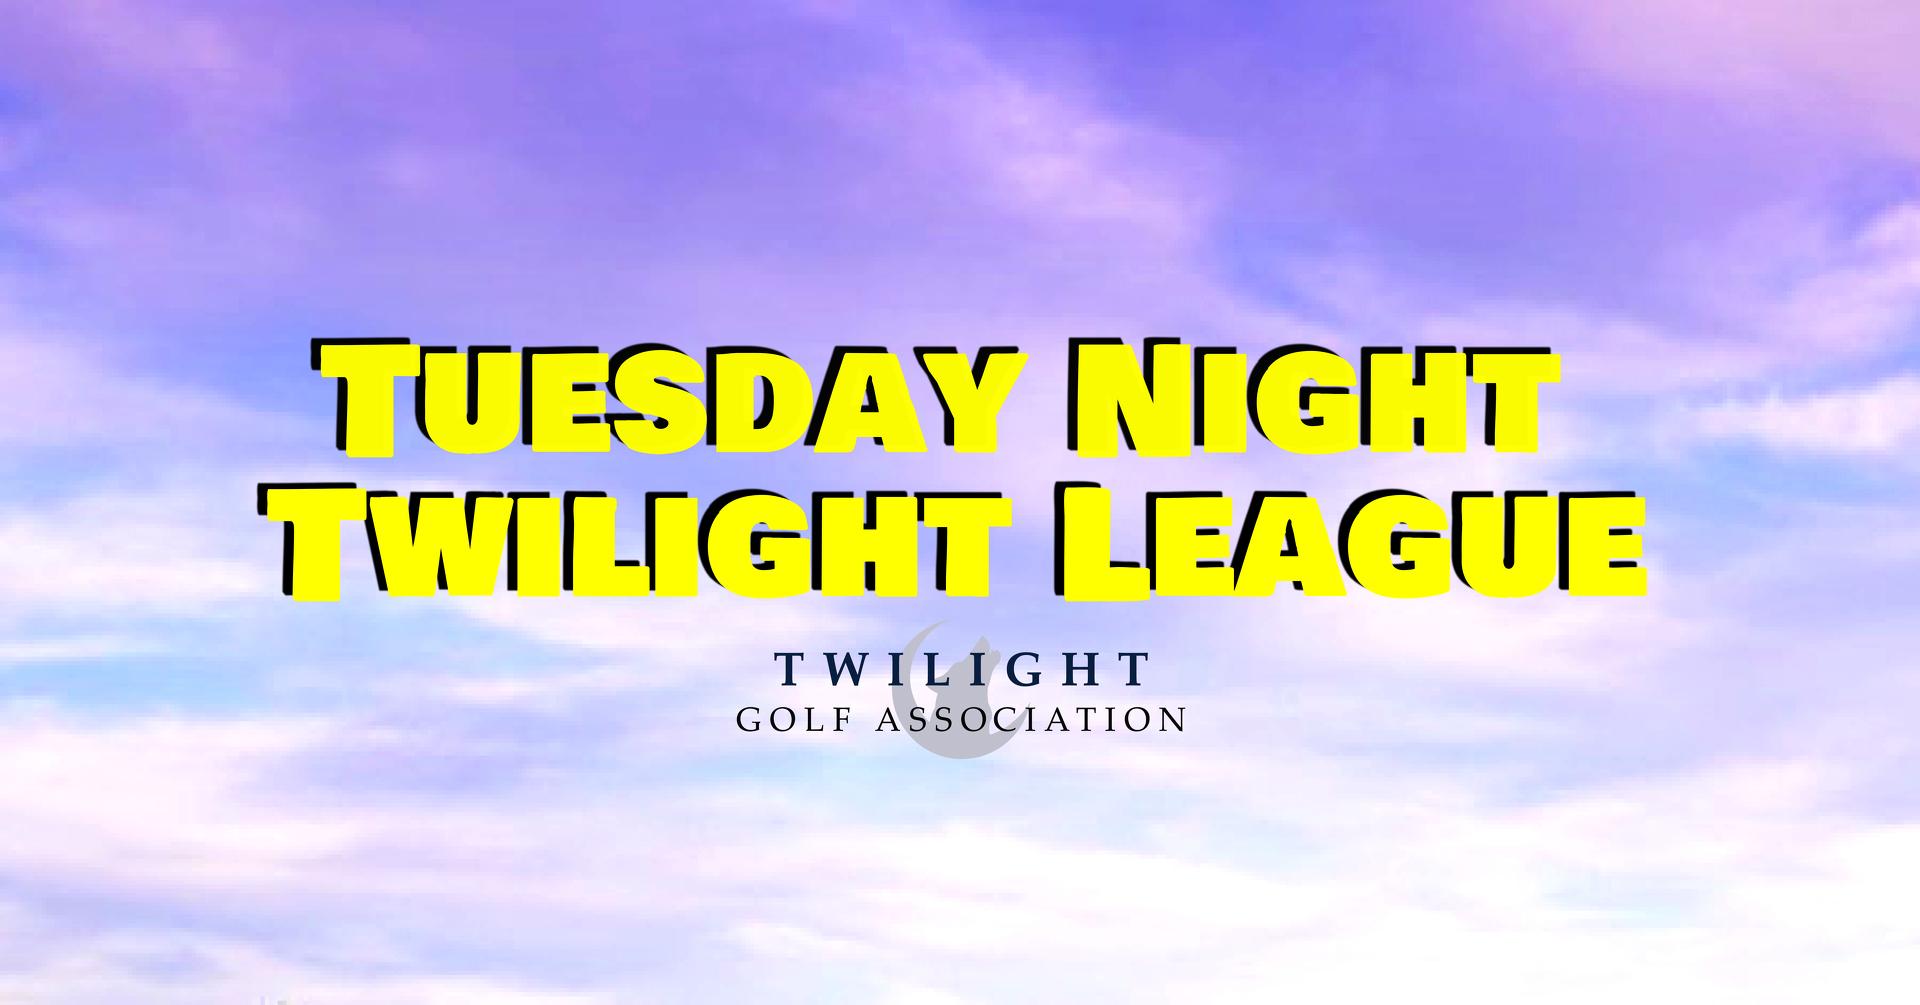 Tuesday Twilight League at Delcastle golf course